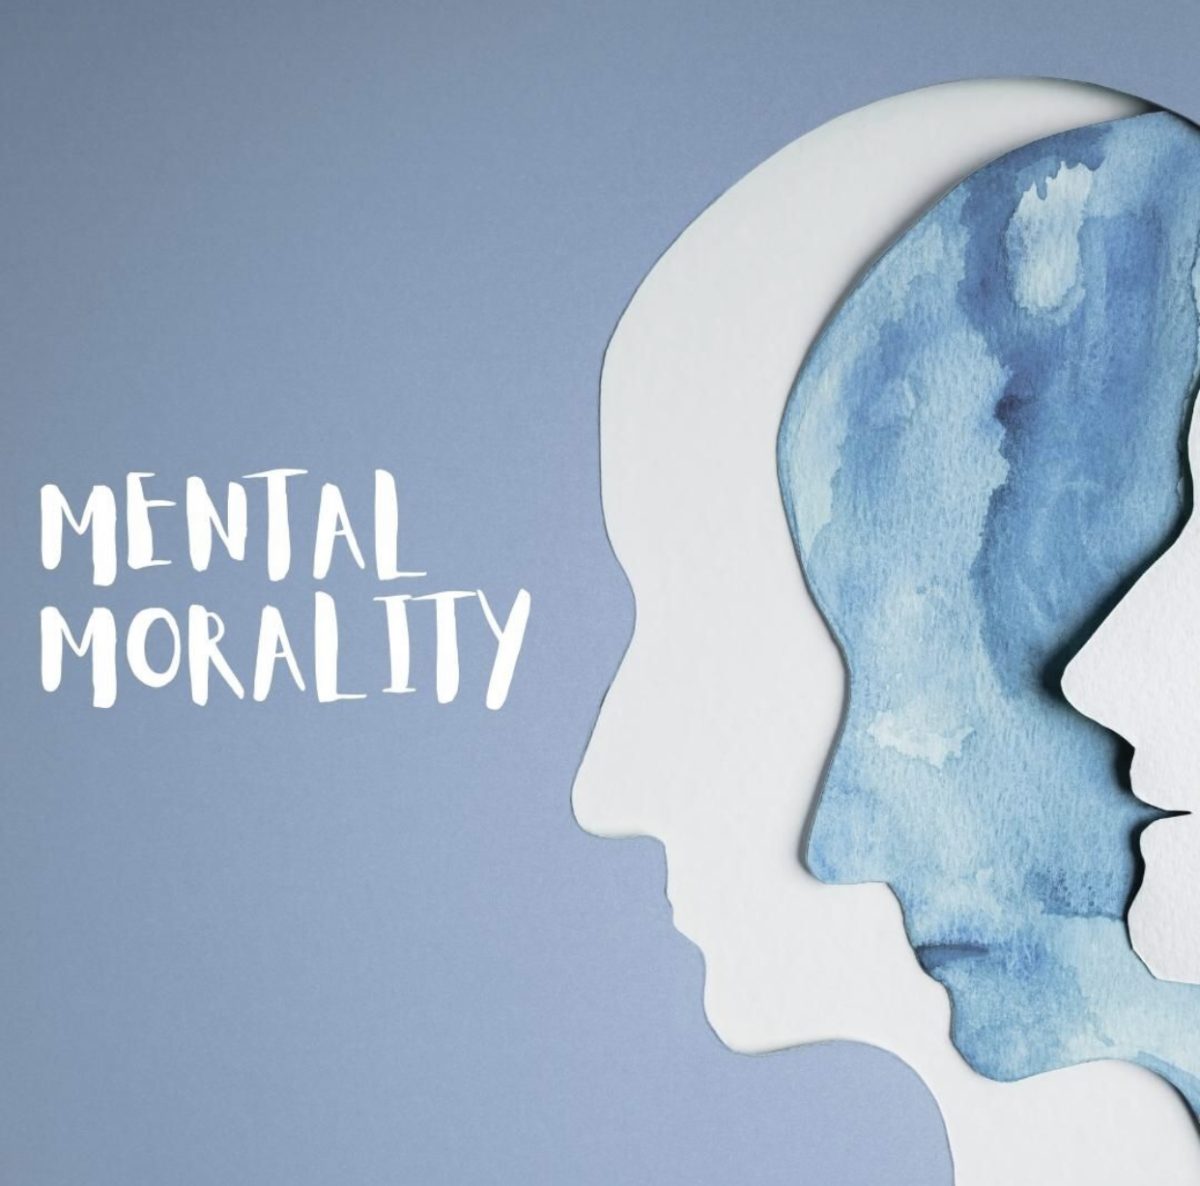 Mental morality